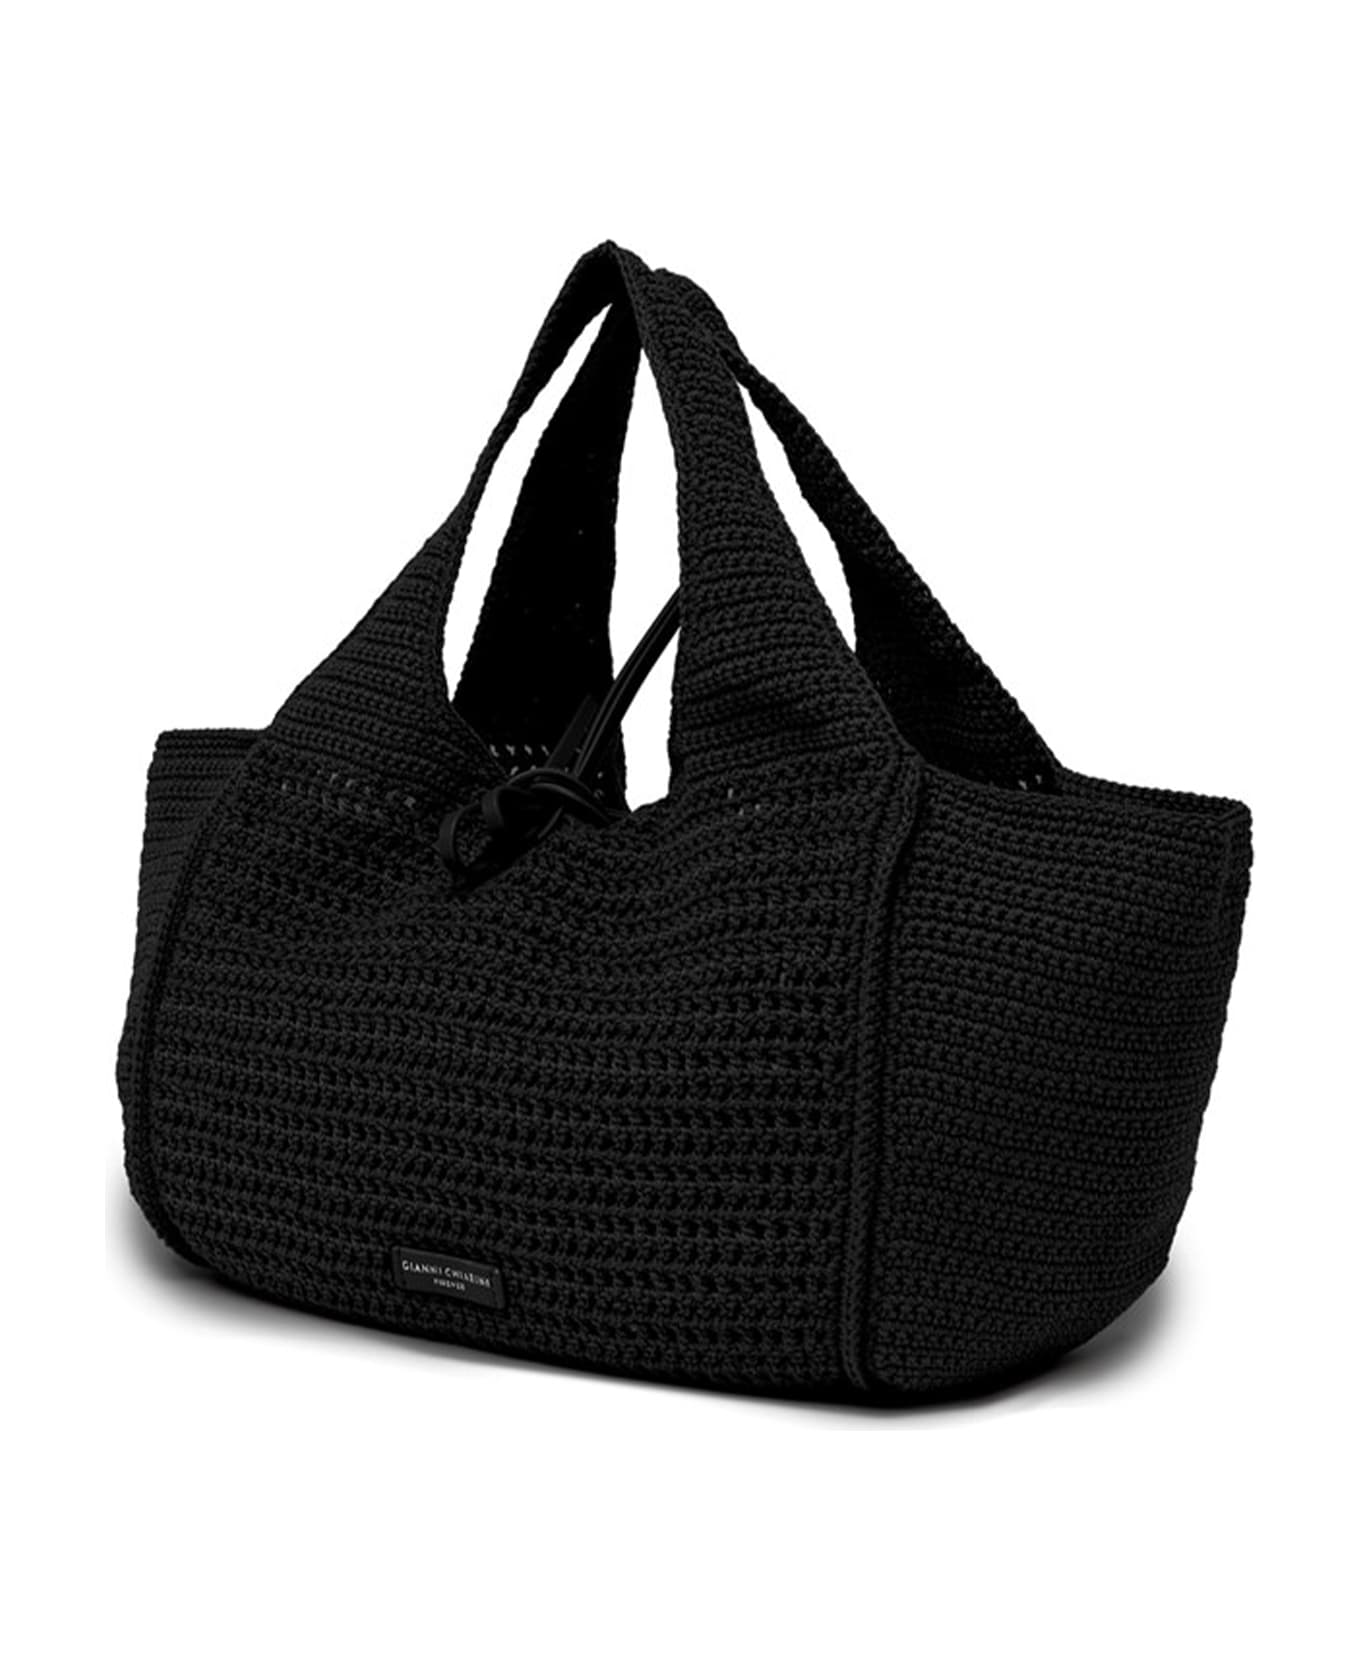 Gianni Chiarini Euforia Black Shopping Bag In Crochet Fabric - NERO